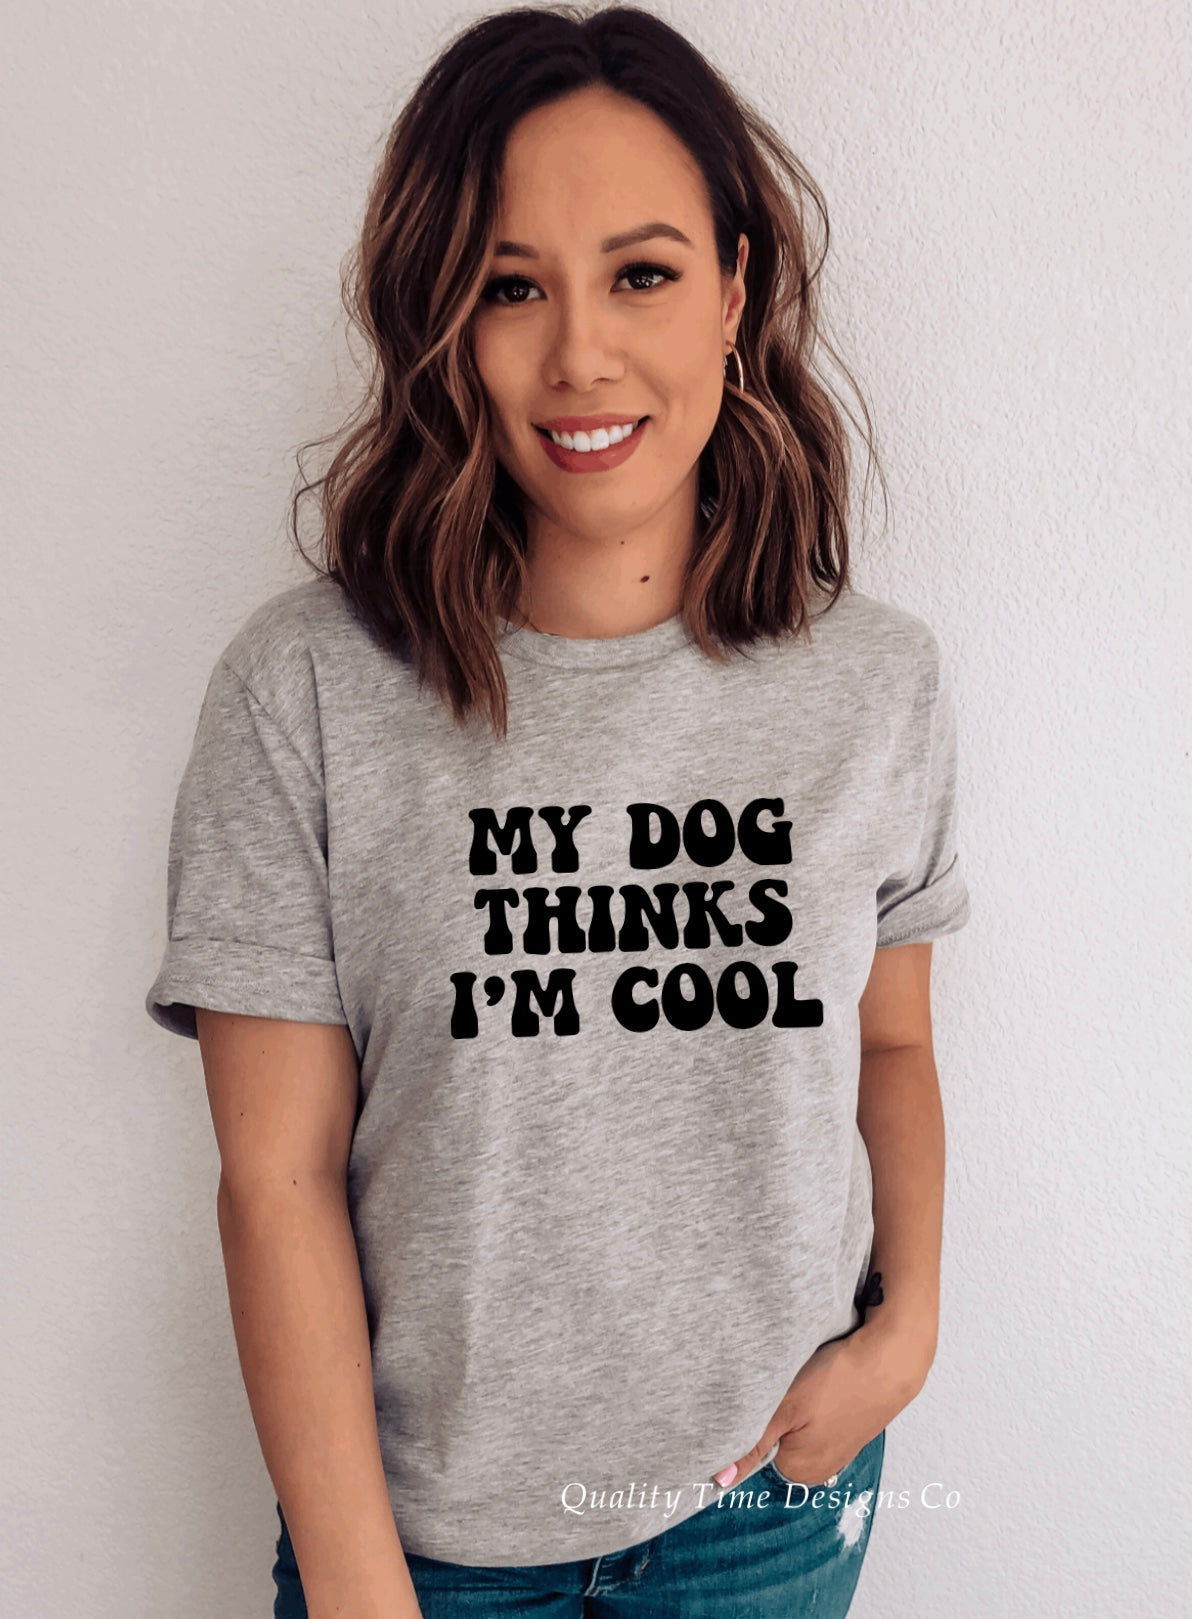 My dog thinks I’m cool t-shirt 